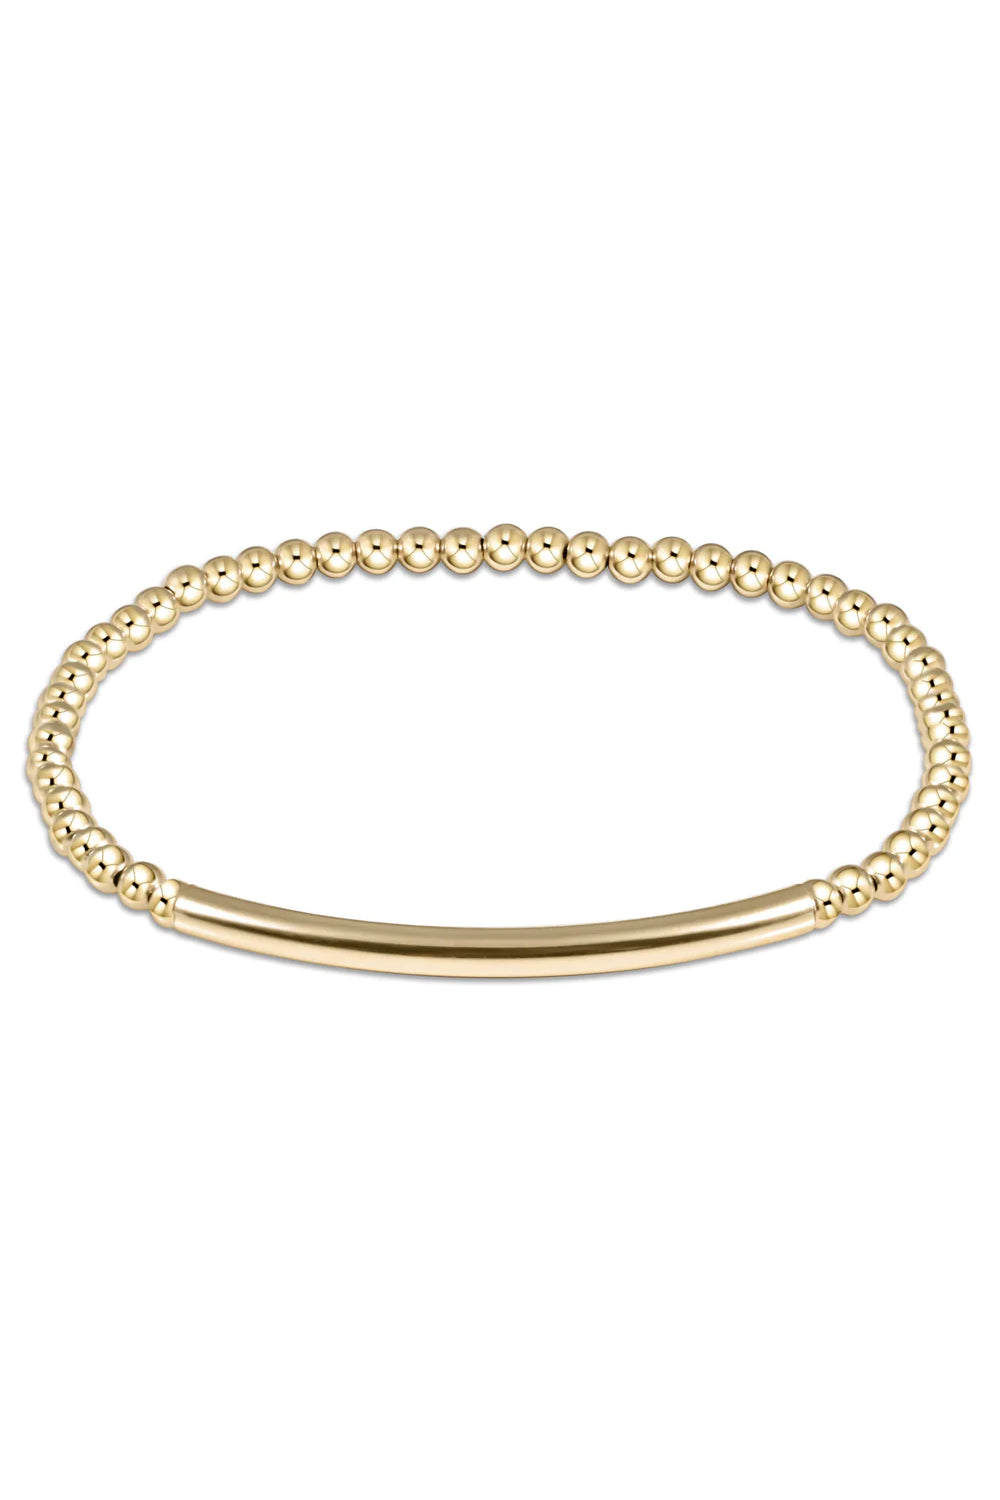 enewton: Classic Gold 3mm Bead Bracelet - Bliss Bar Smooth | Makk Fashions